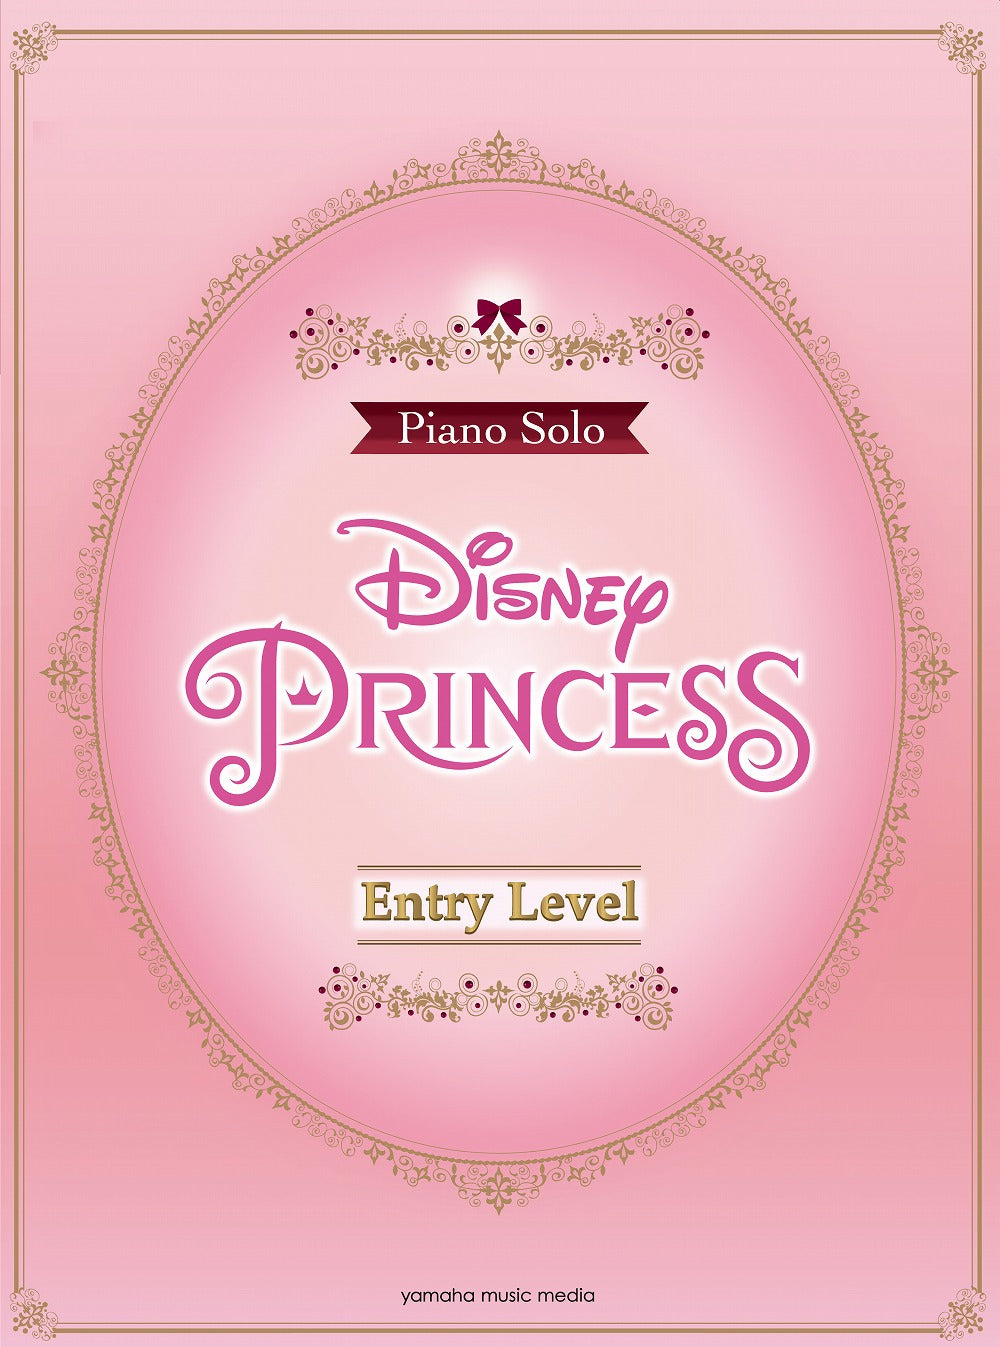 Disney Princess Vol. 1 Piano Solo Entry Level/English Version